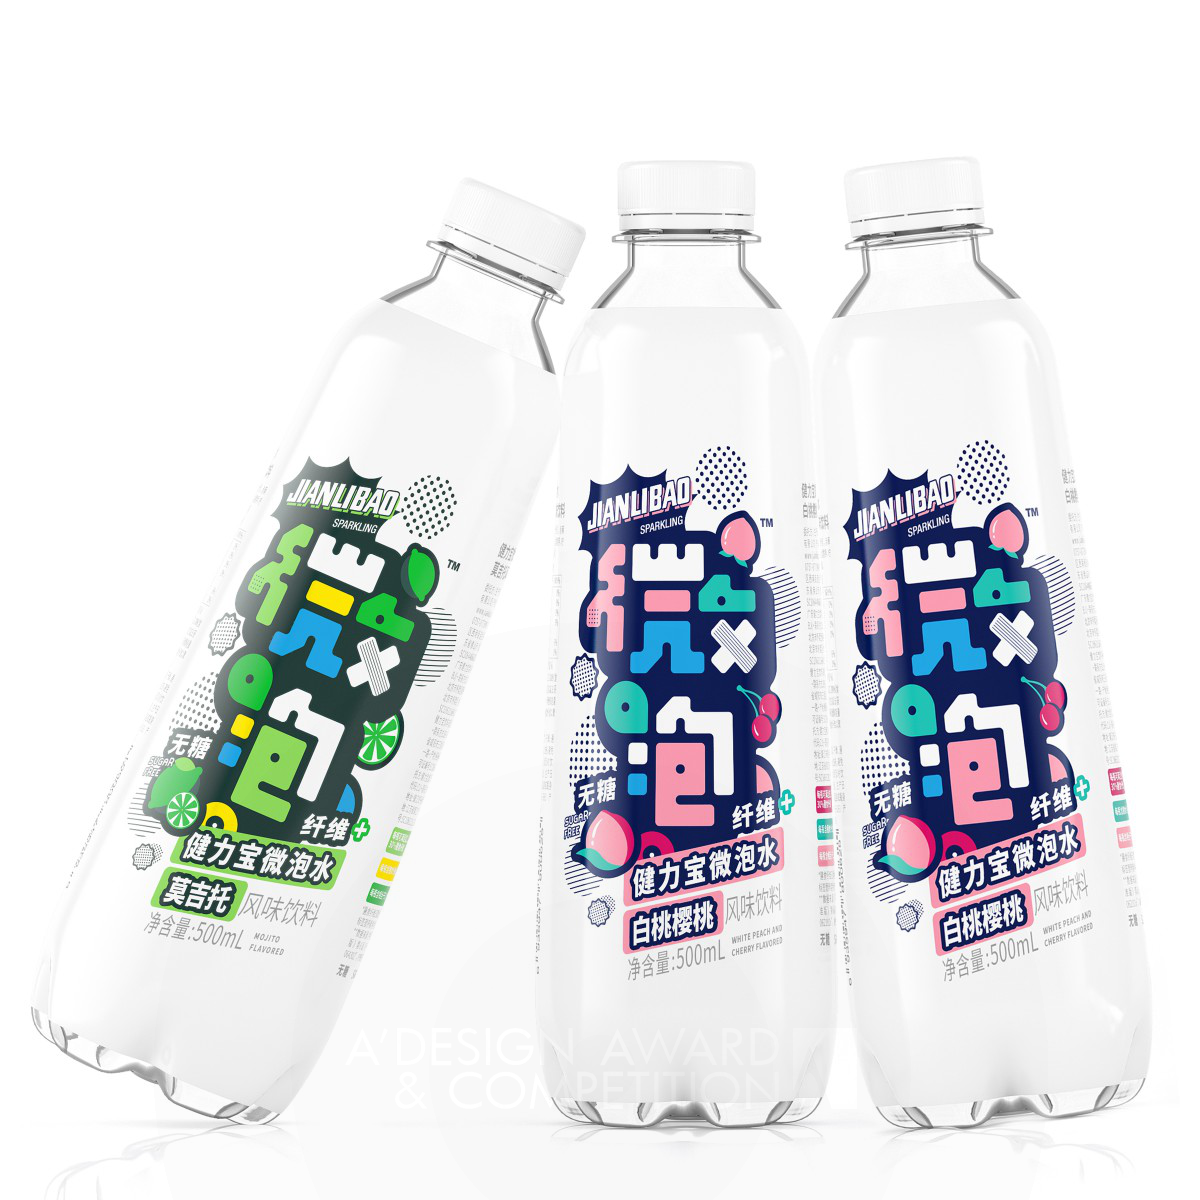 Jianlibao Wepop <b>Sugar-free Sparkling Water